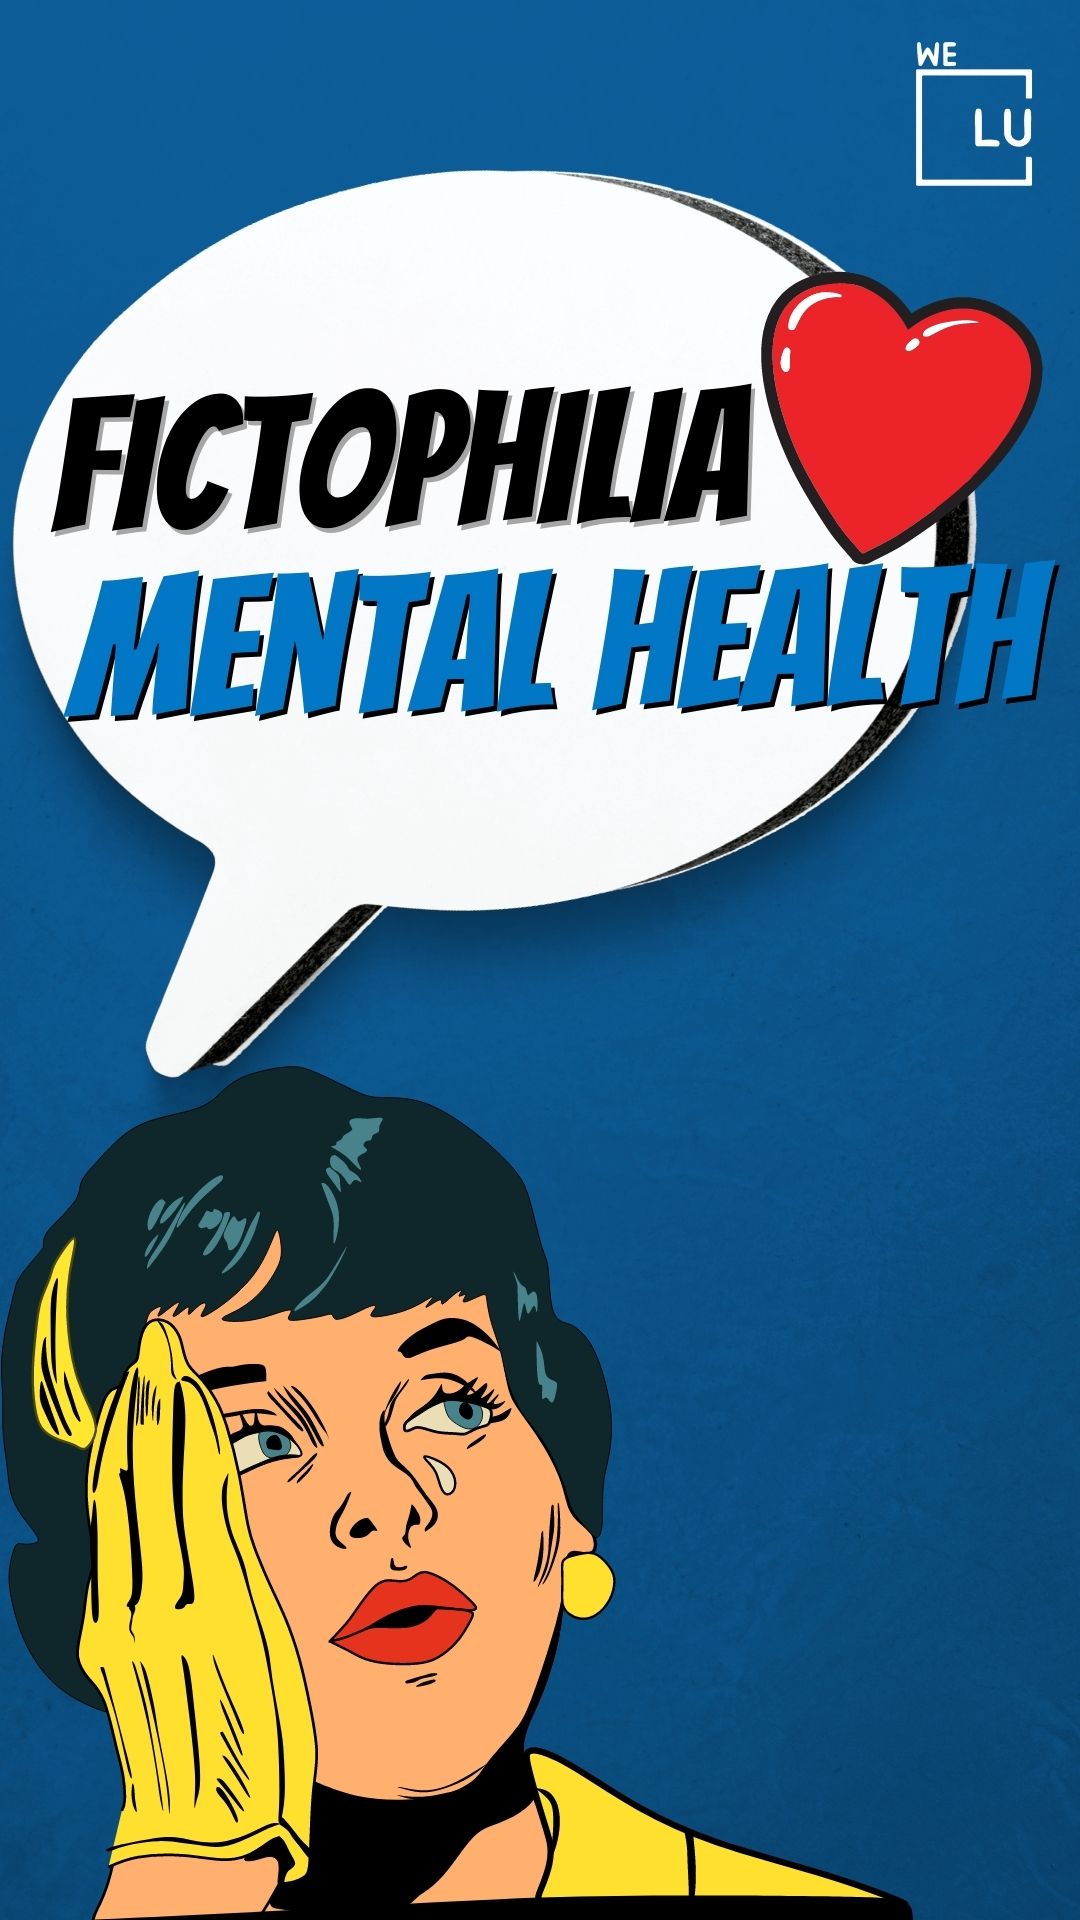 Fictophilia Mental Health